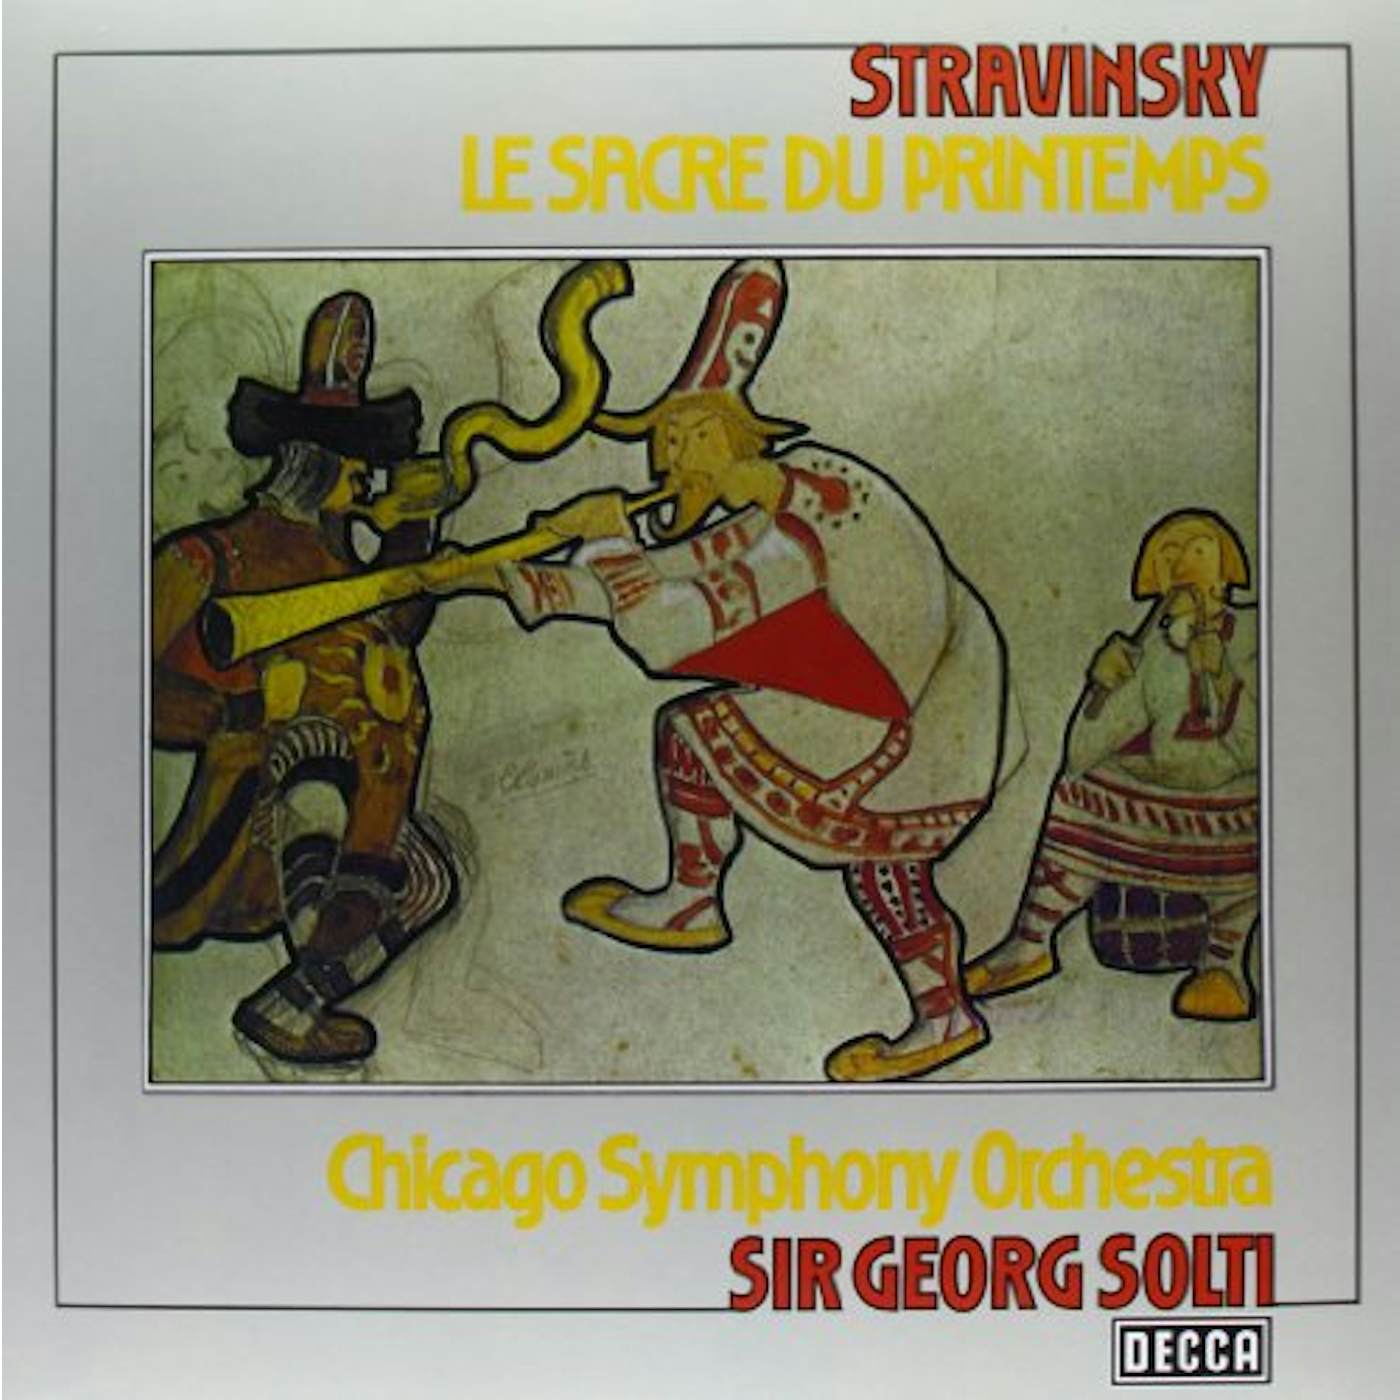 Stravinsky / Solti / Chicago Symphony Orchestra SACRE DU PRINTEMPS Vinyl Record - 180 Gram Pressing